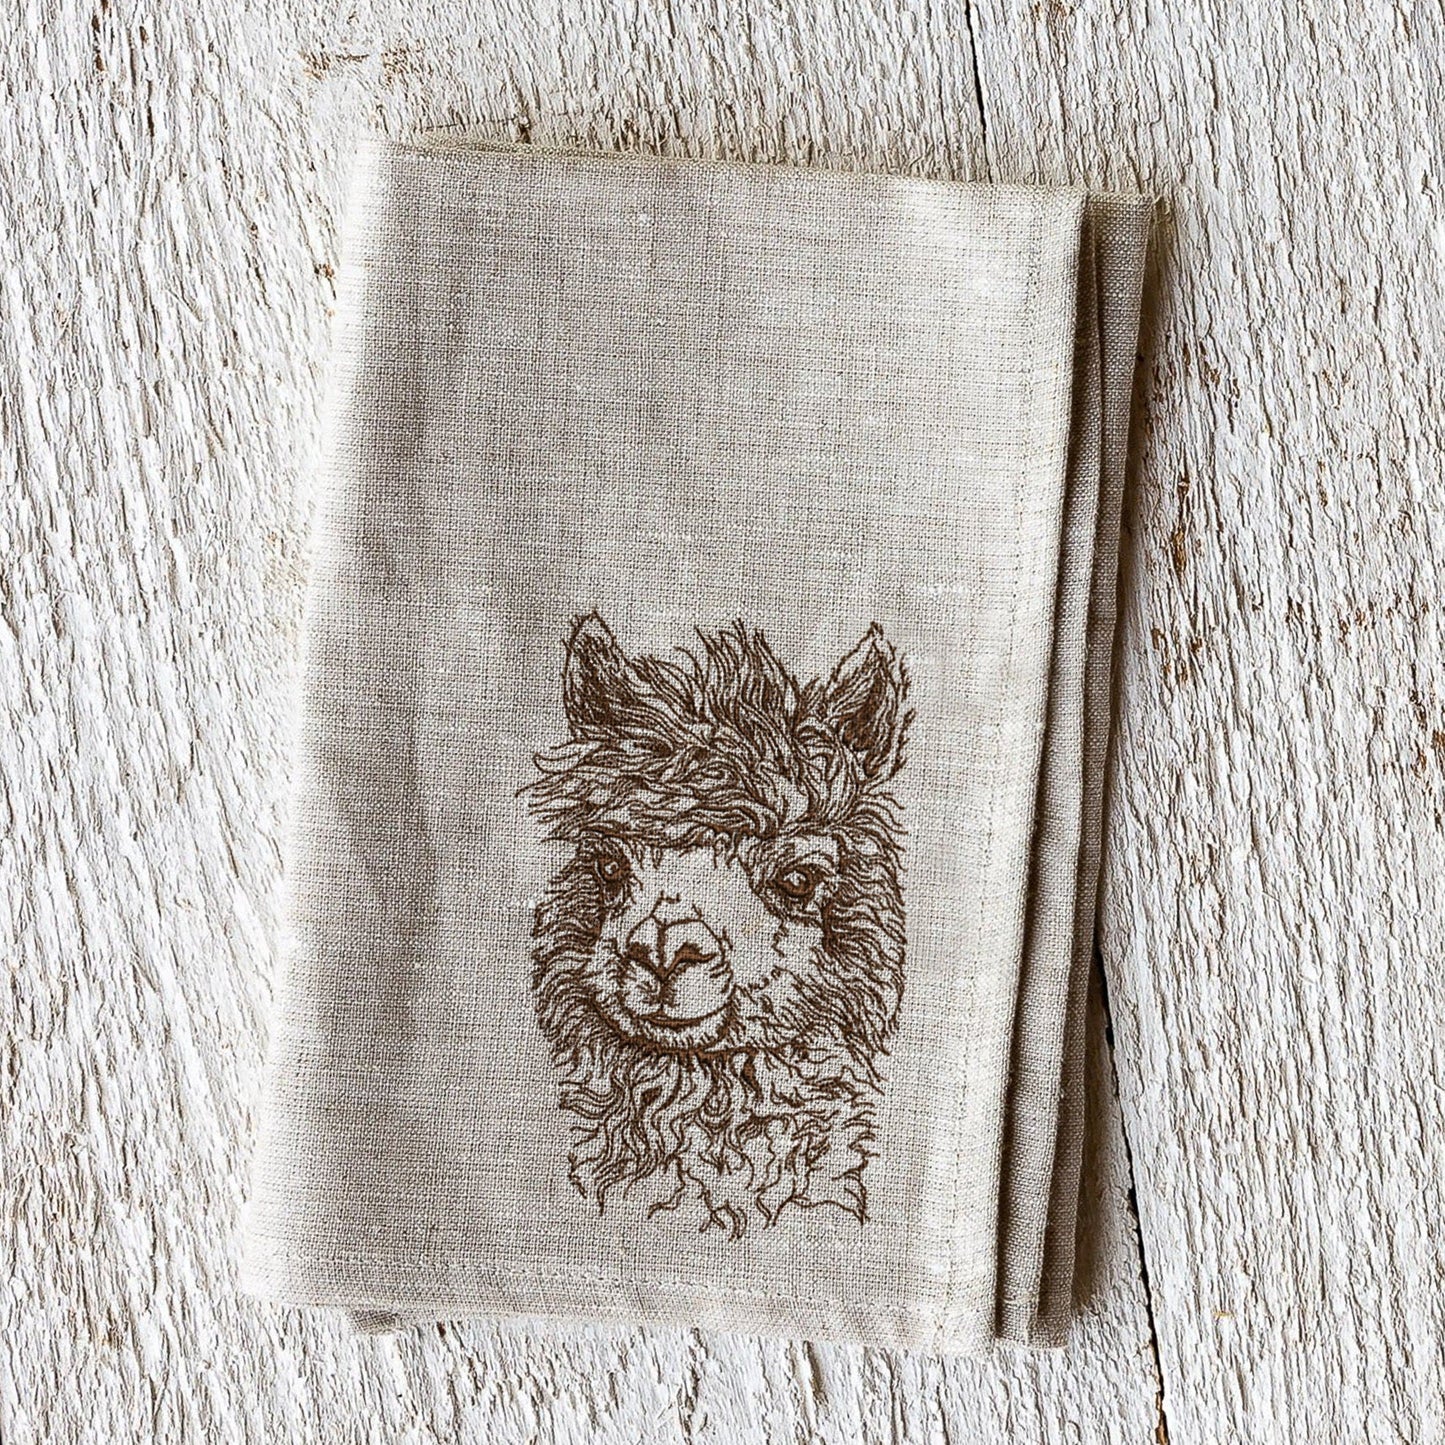 Alpaca Llama Machine Embroidery Design on towel